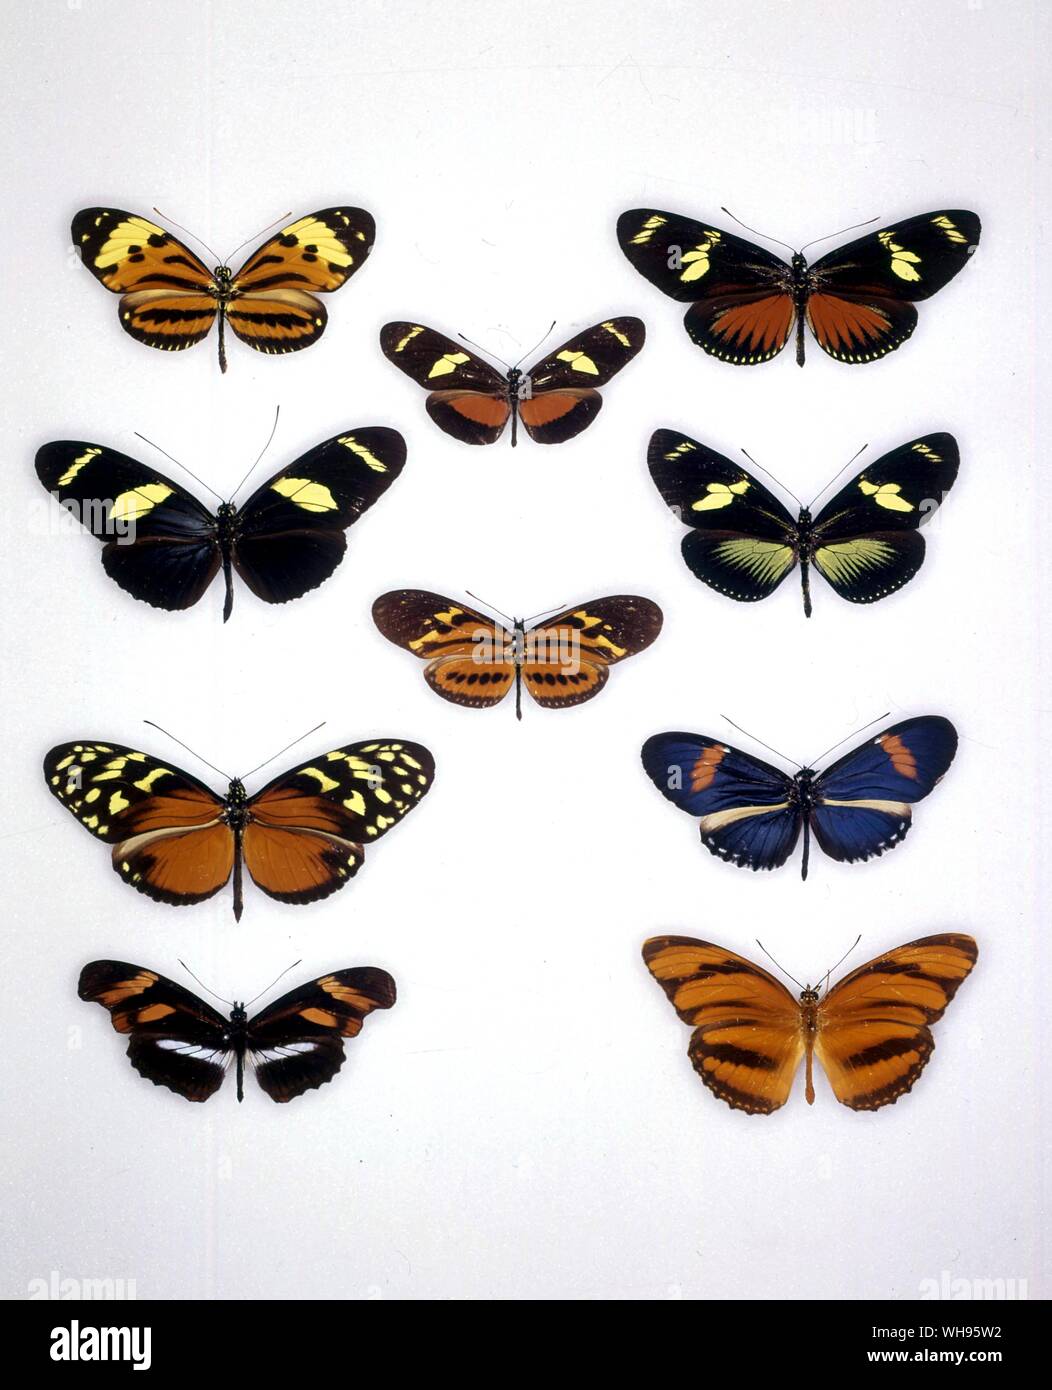 Butterflies/moths - (left to right) Heliconius ethillus, Heliconius recini, Heliconius doris, Heliconius wallacei, Eueides isabella, Heliconius doris, Heliconius anderida, heliconius vulcanus, Podotricha telesiphe telesiphe, Dryadula phaetusa Stock Photo